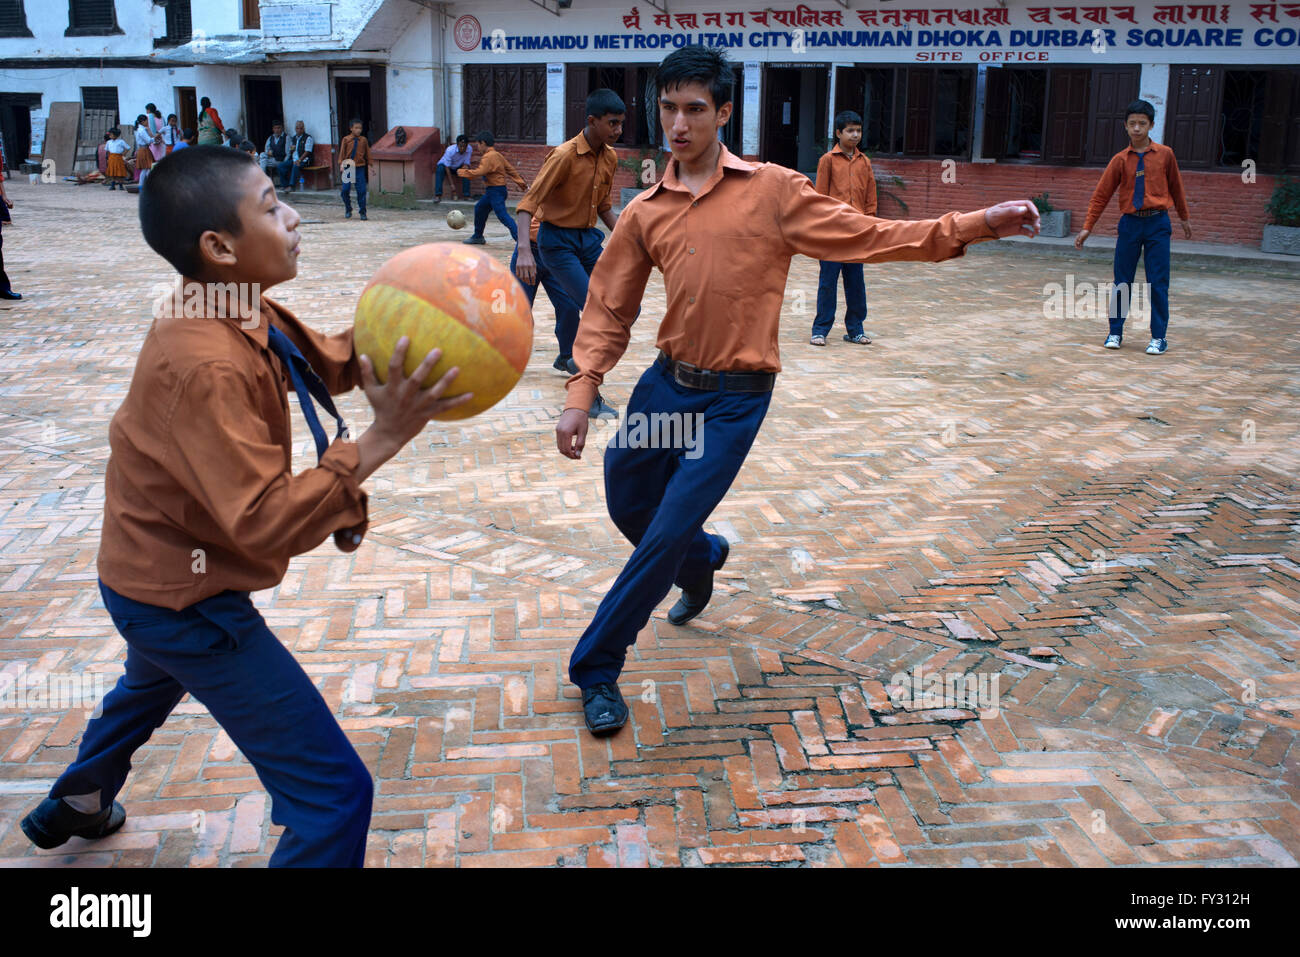 Local students play with a ball in Kathmandu Metropolitan City Hanuman Dhoka Durbar Square, Kathmandu, Nepal. Stock Photo